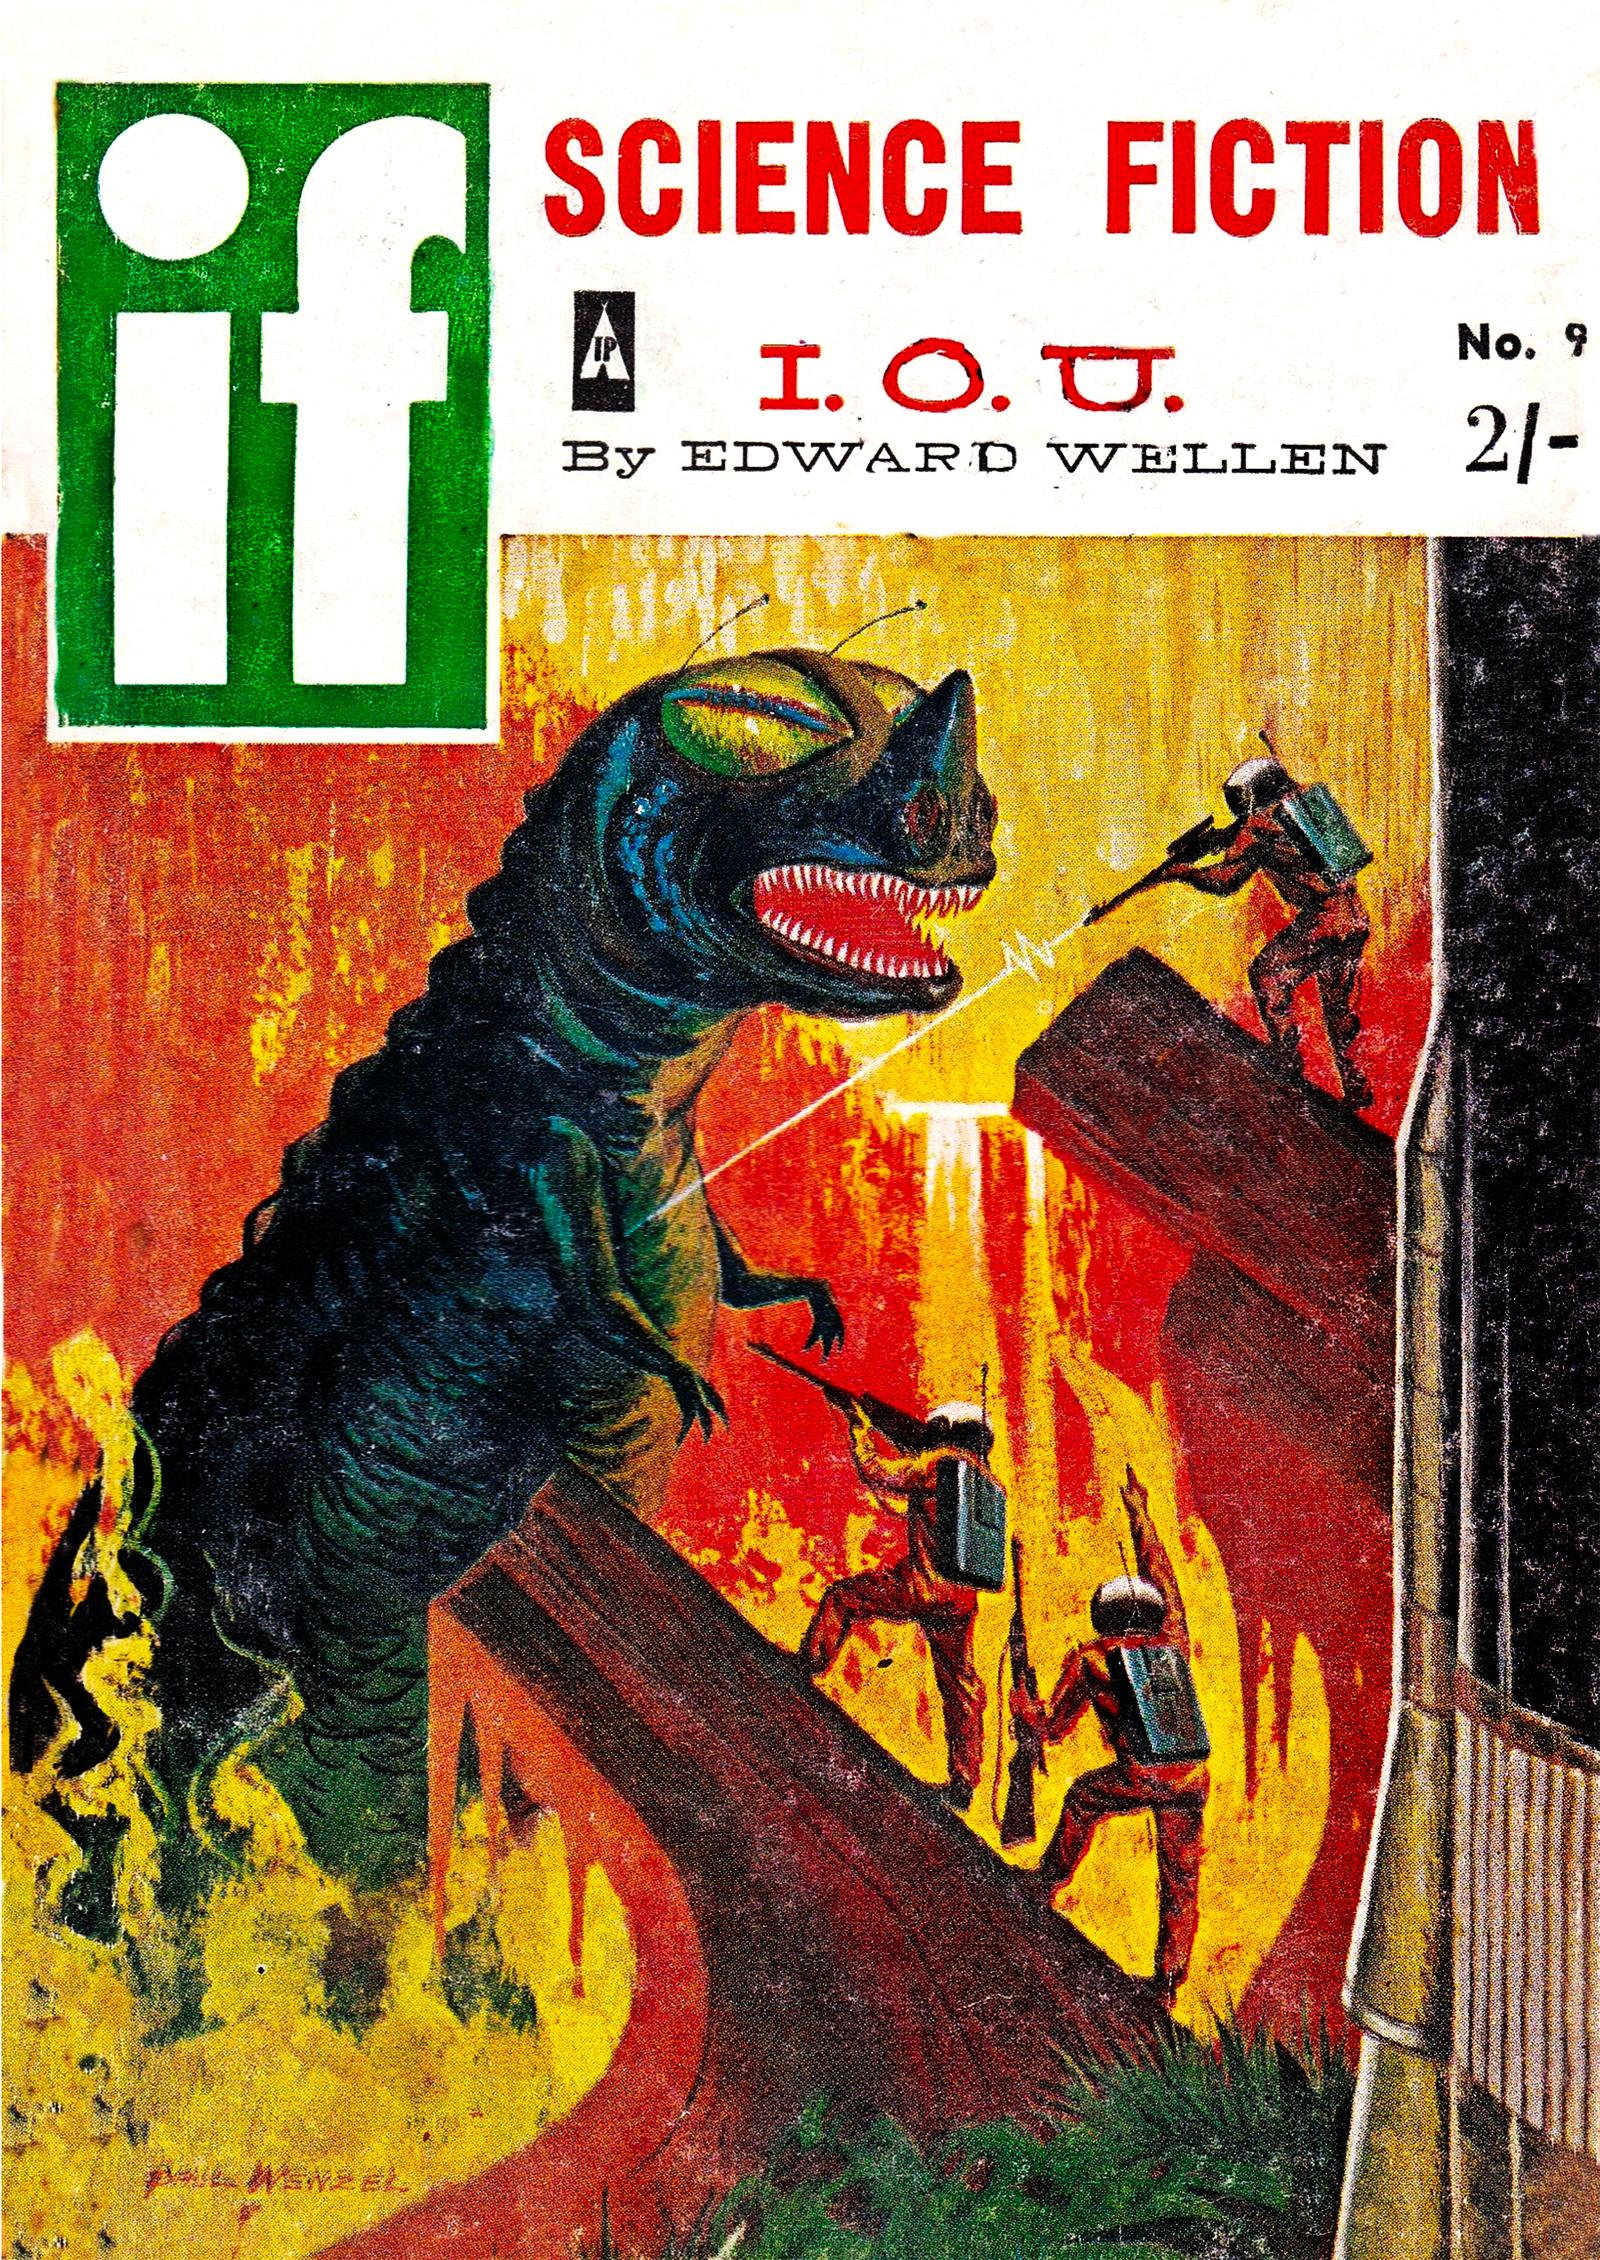 Godzilla like Dinosaur Monster, SciFi, Science Fiction Cover Illustration (Amerikanische Moderne), Painting, von Paul Wenzel